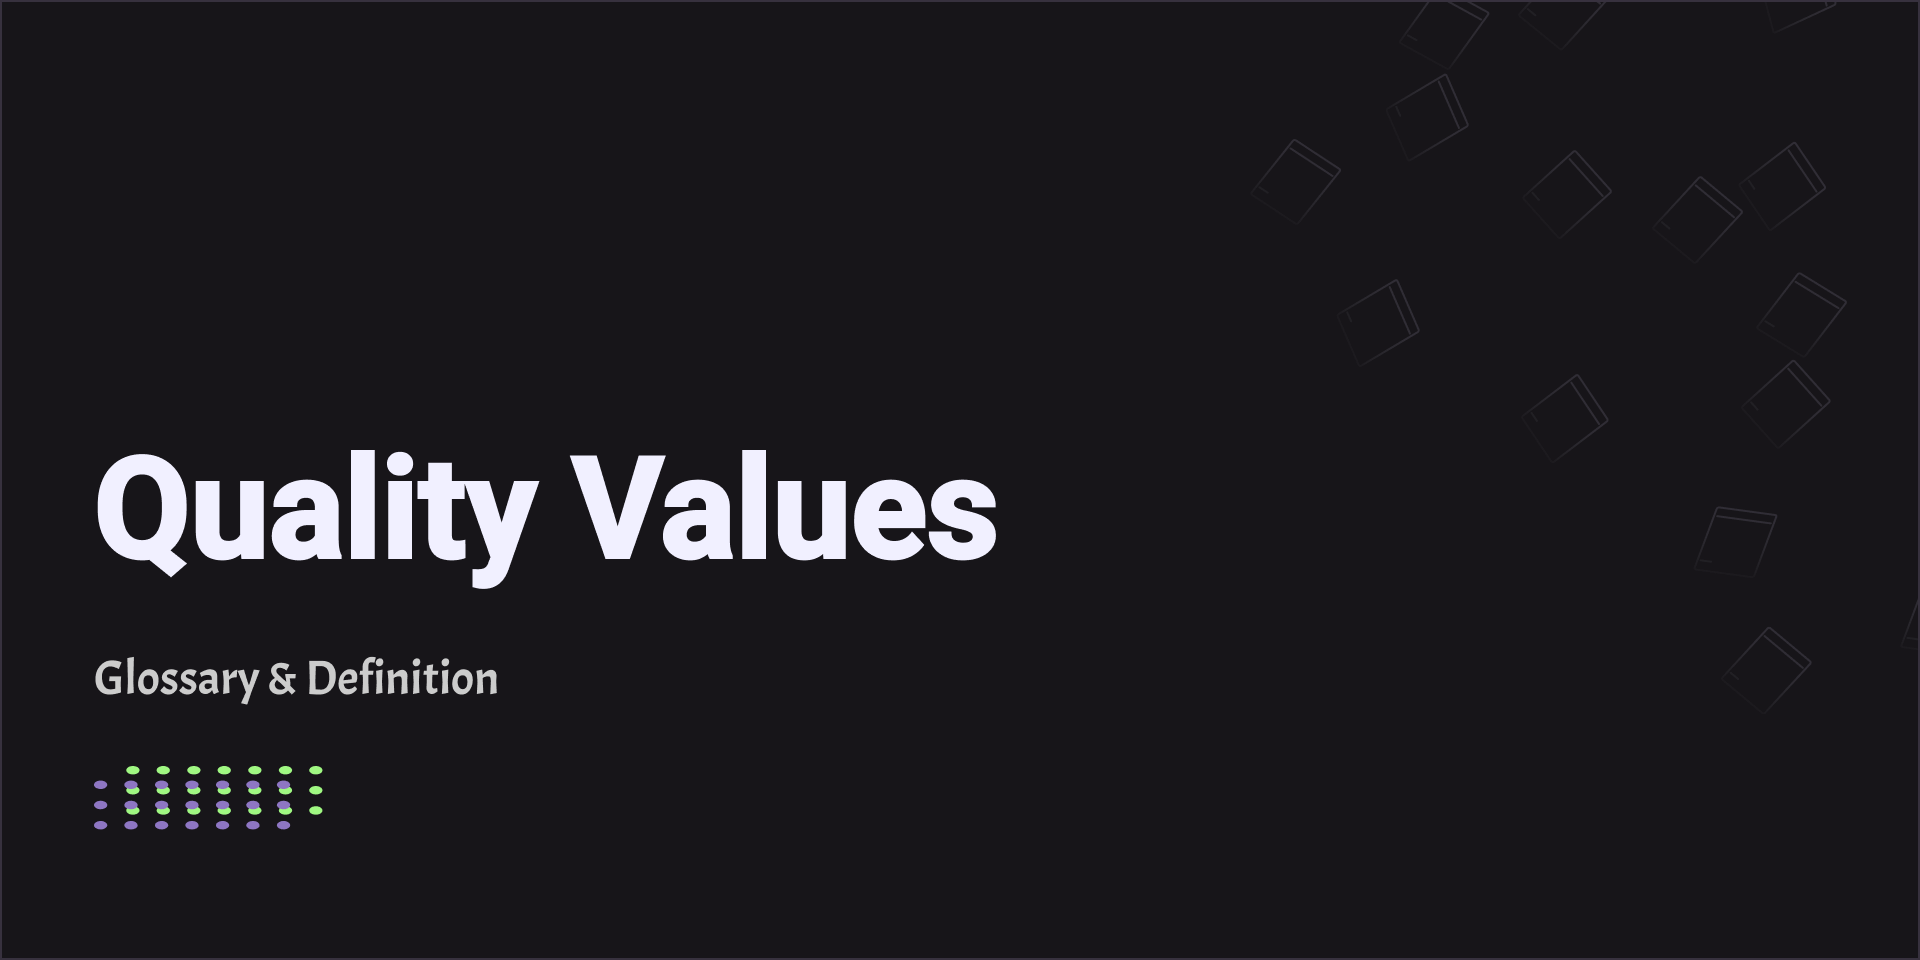 Quality Values